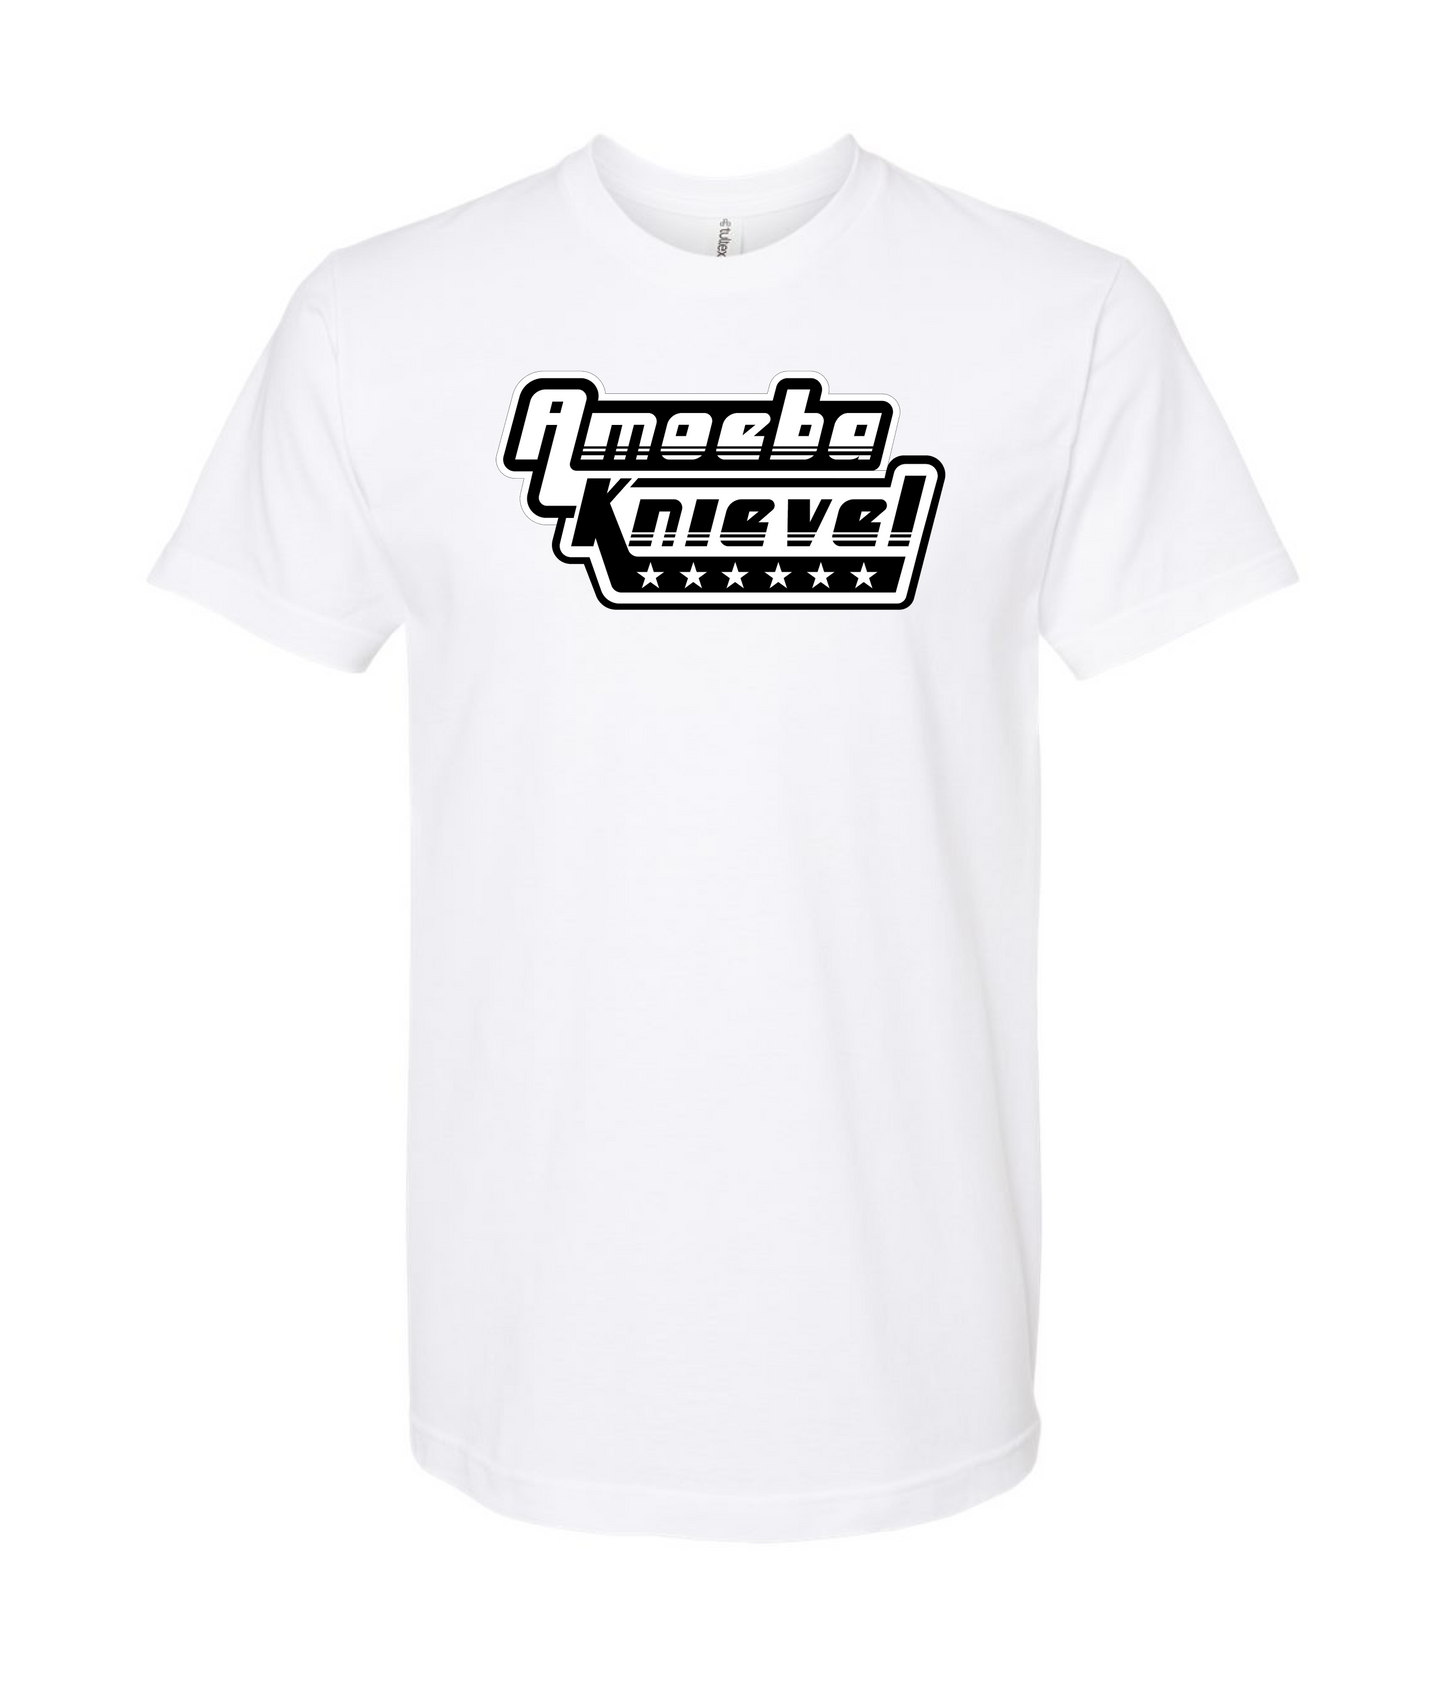 Amoeba Knievel Merch 'N Stuff - Logo - White T-Shirt